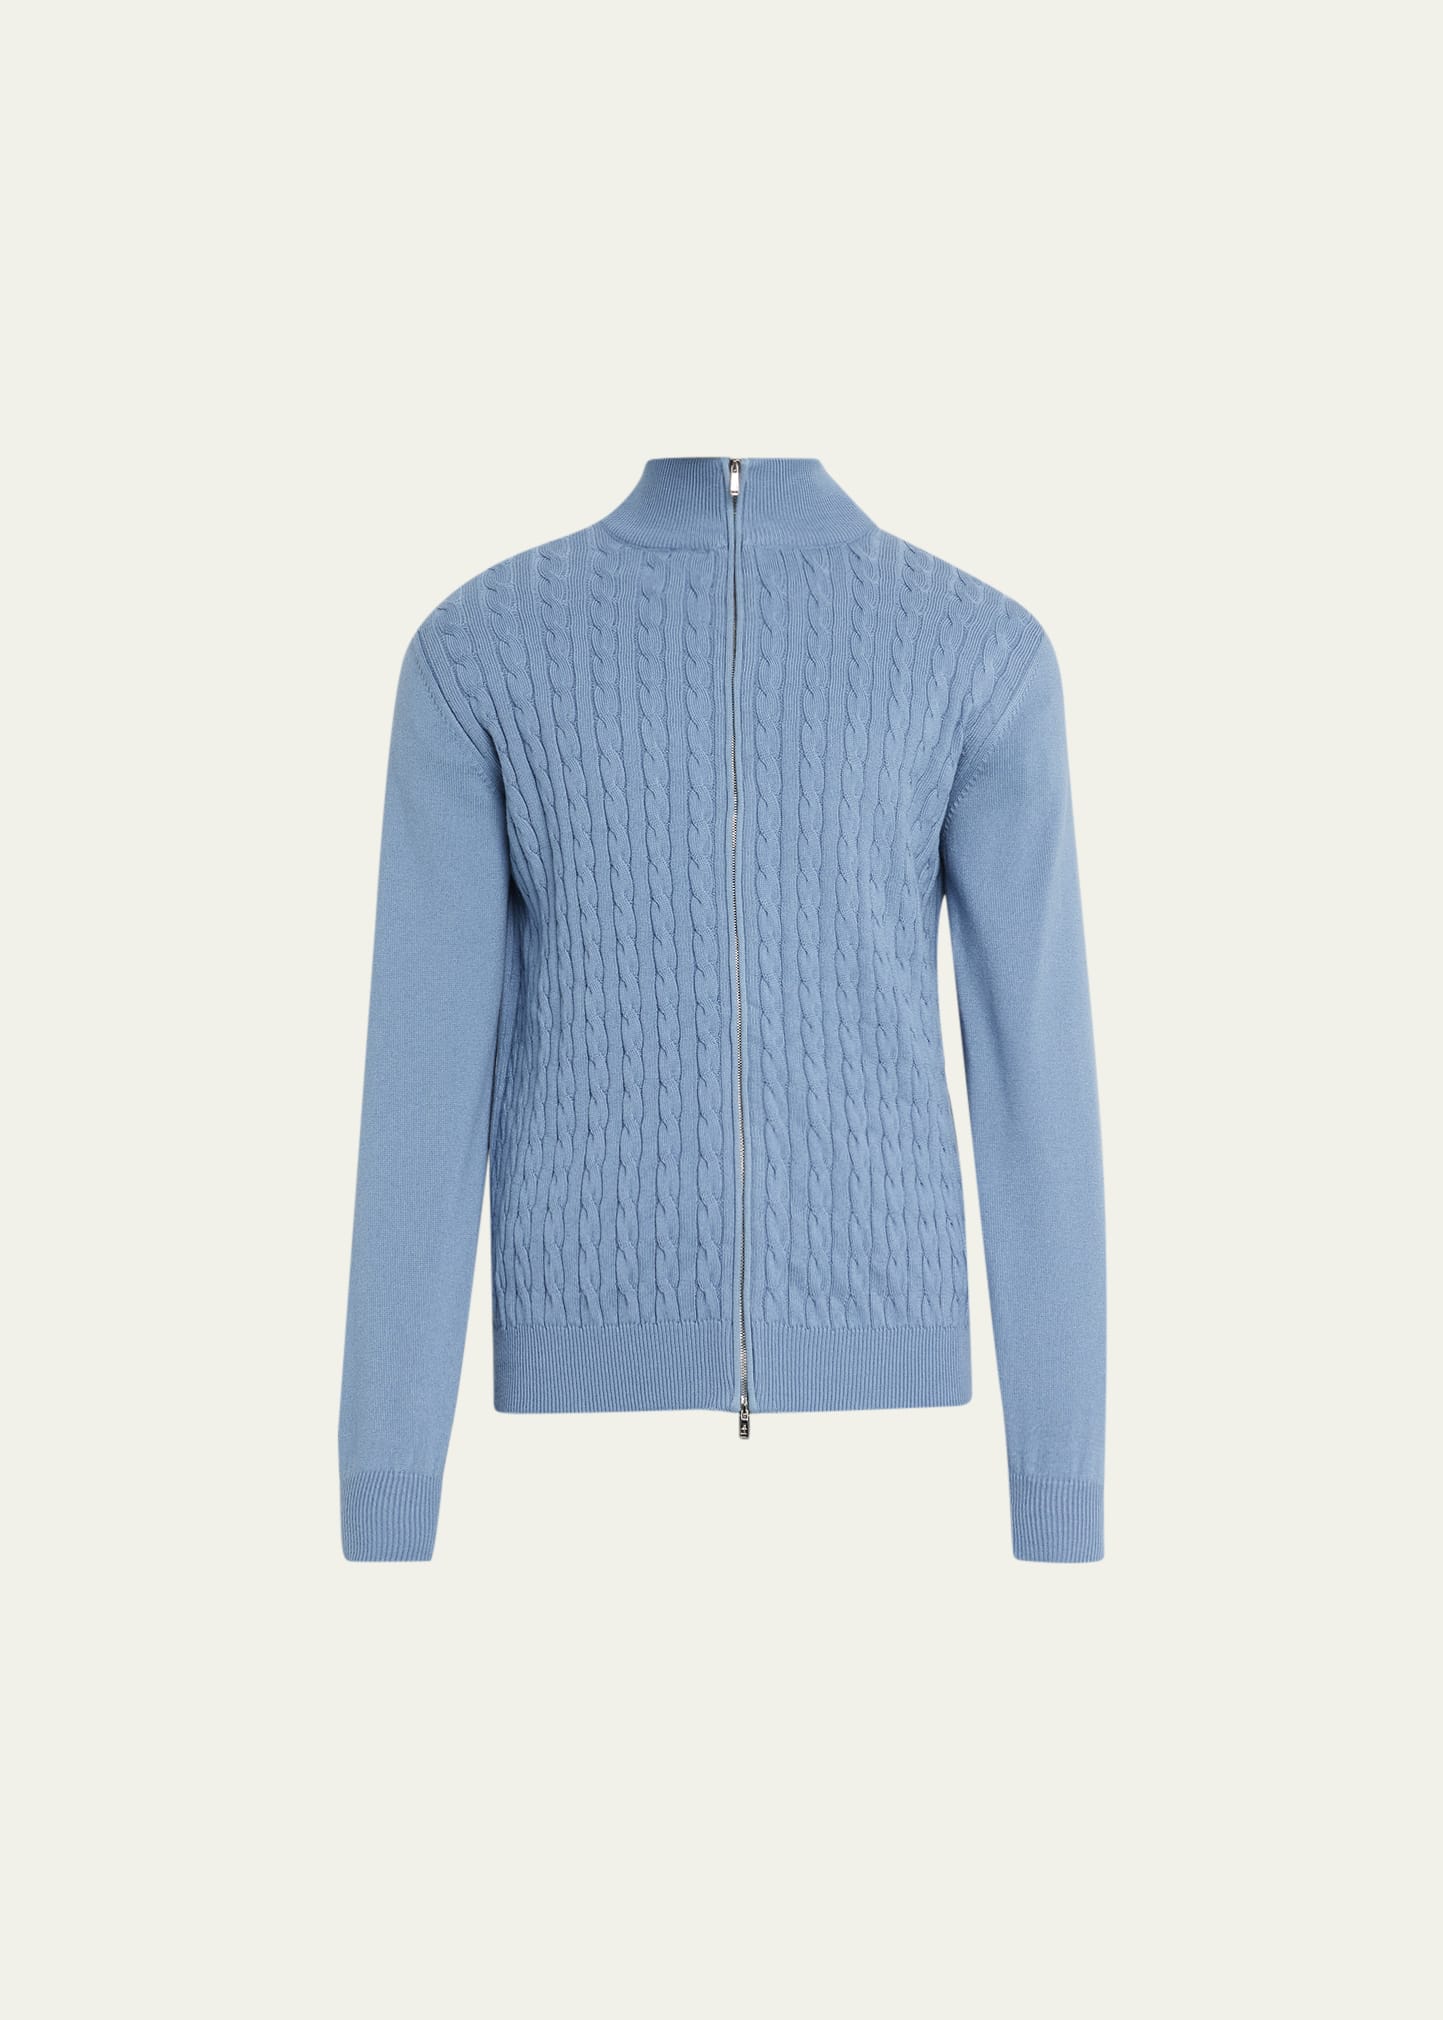 Fioroni Men's Cable Knit Full-Zip Sweater